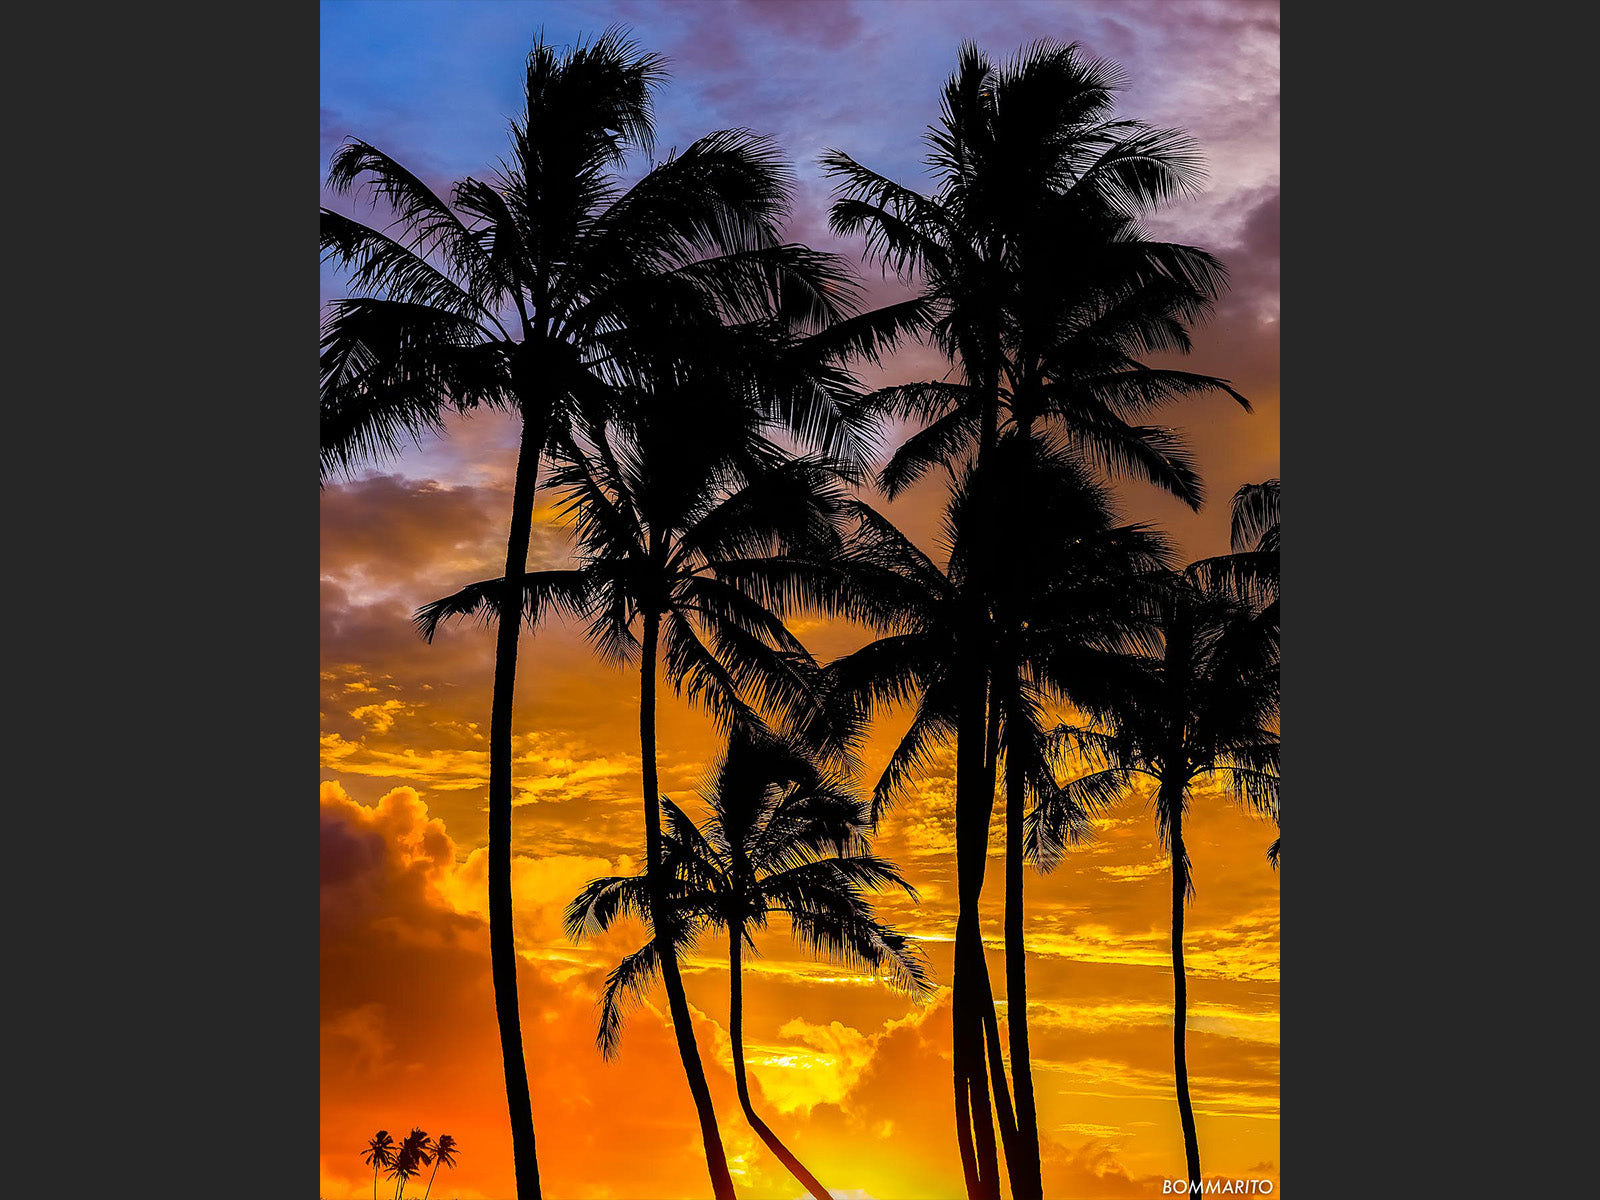 Hawaiian Sunrise